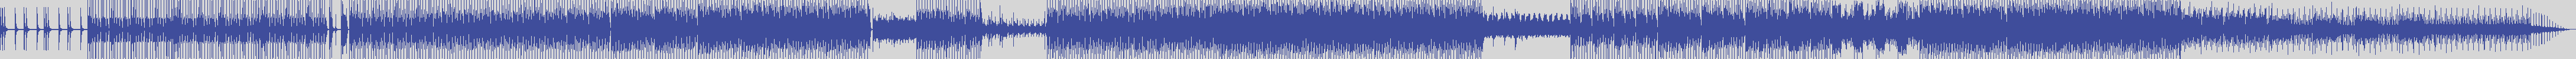 atomic_recordings [AR007] N-Rk - Spritit of House [Three-bal Dub Mix] audio wave form